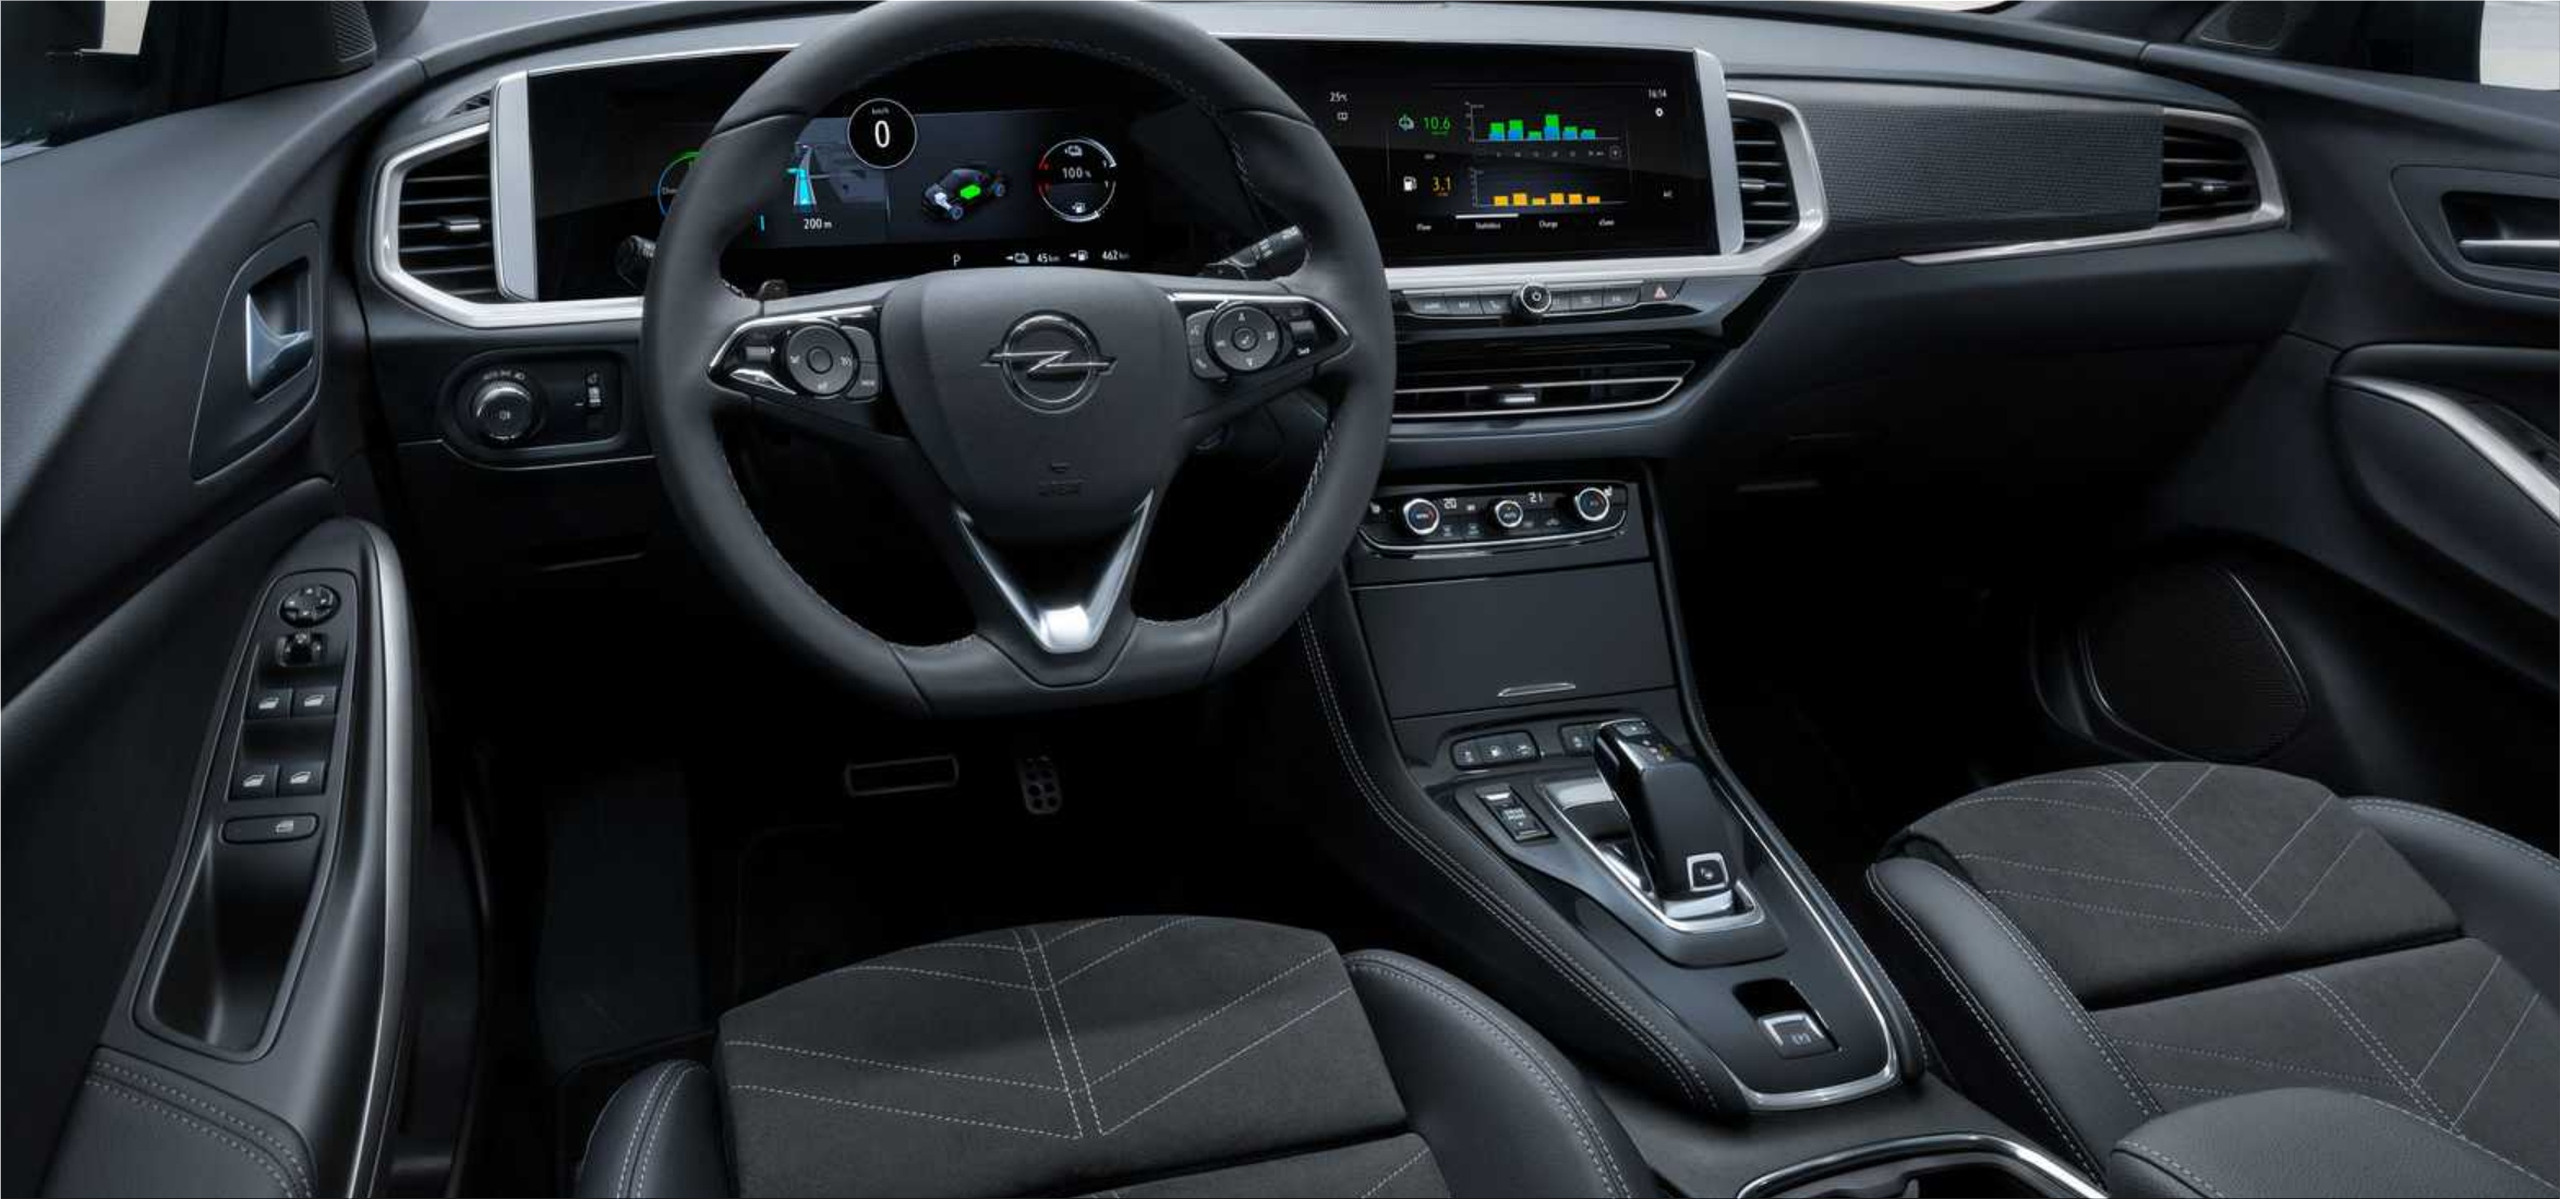 Opel Astra H Tuning Foto & Bild  industry & technology, trucks